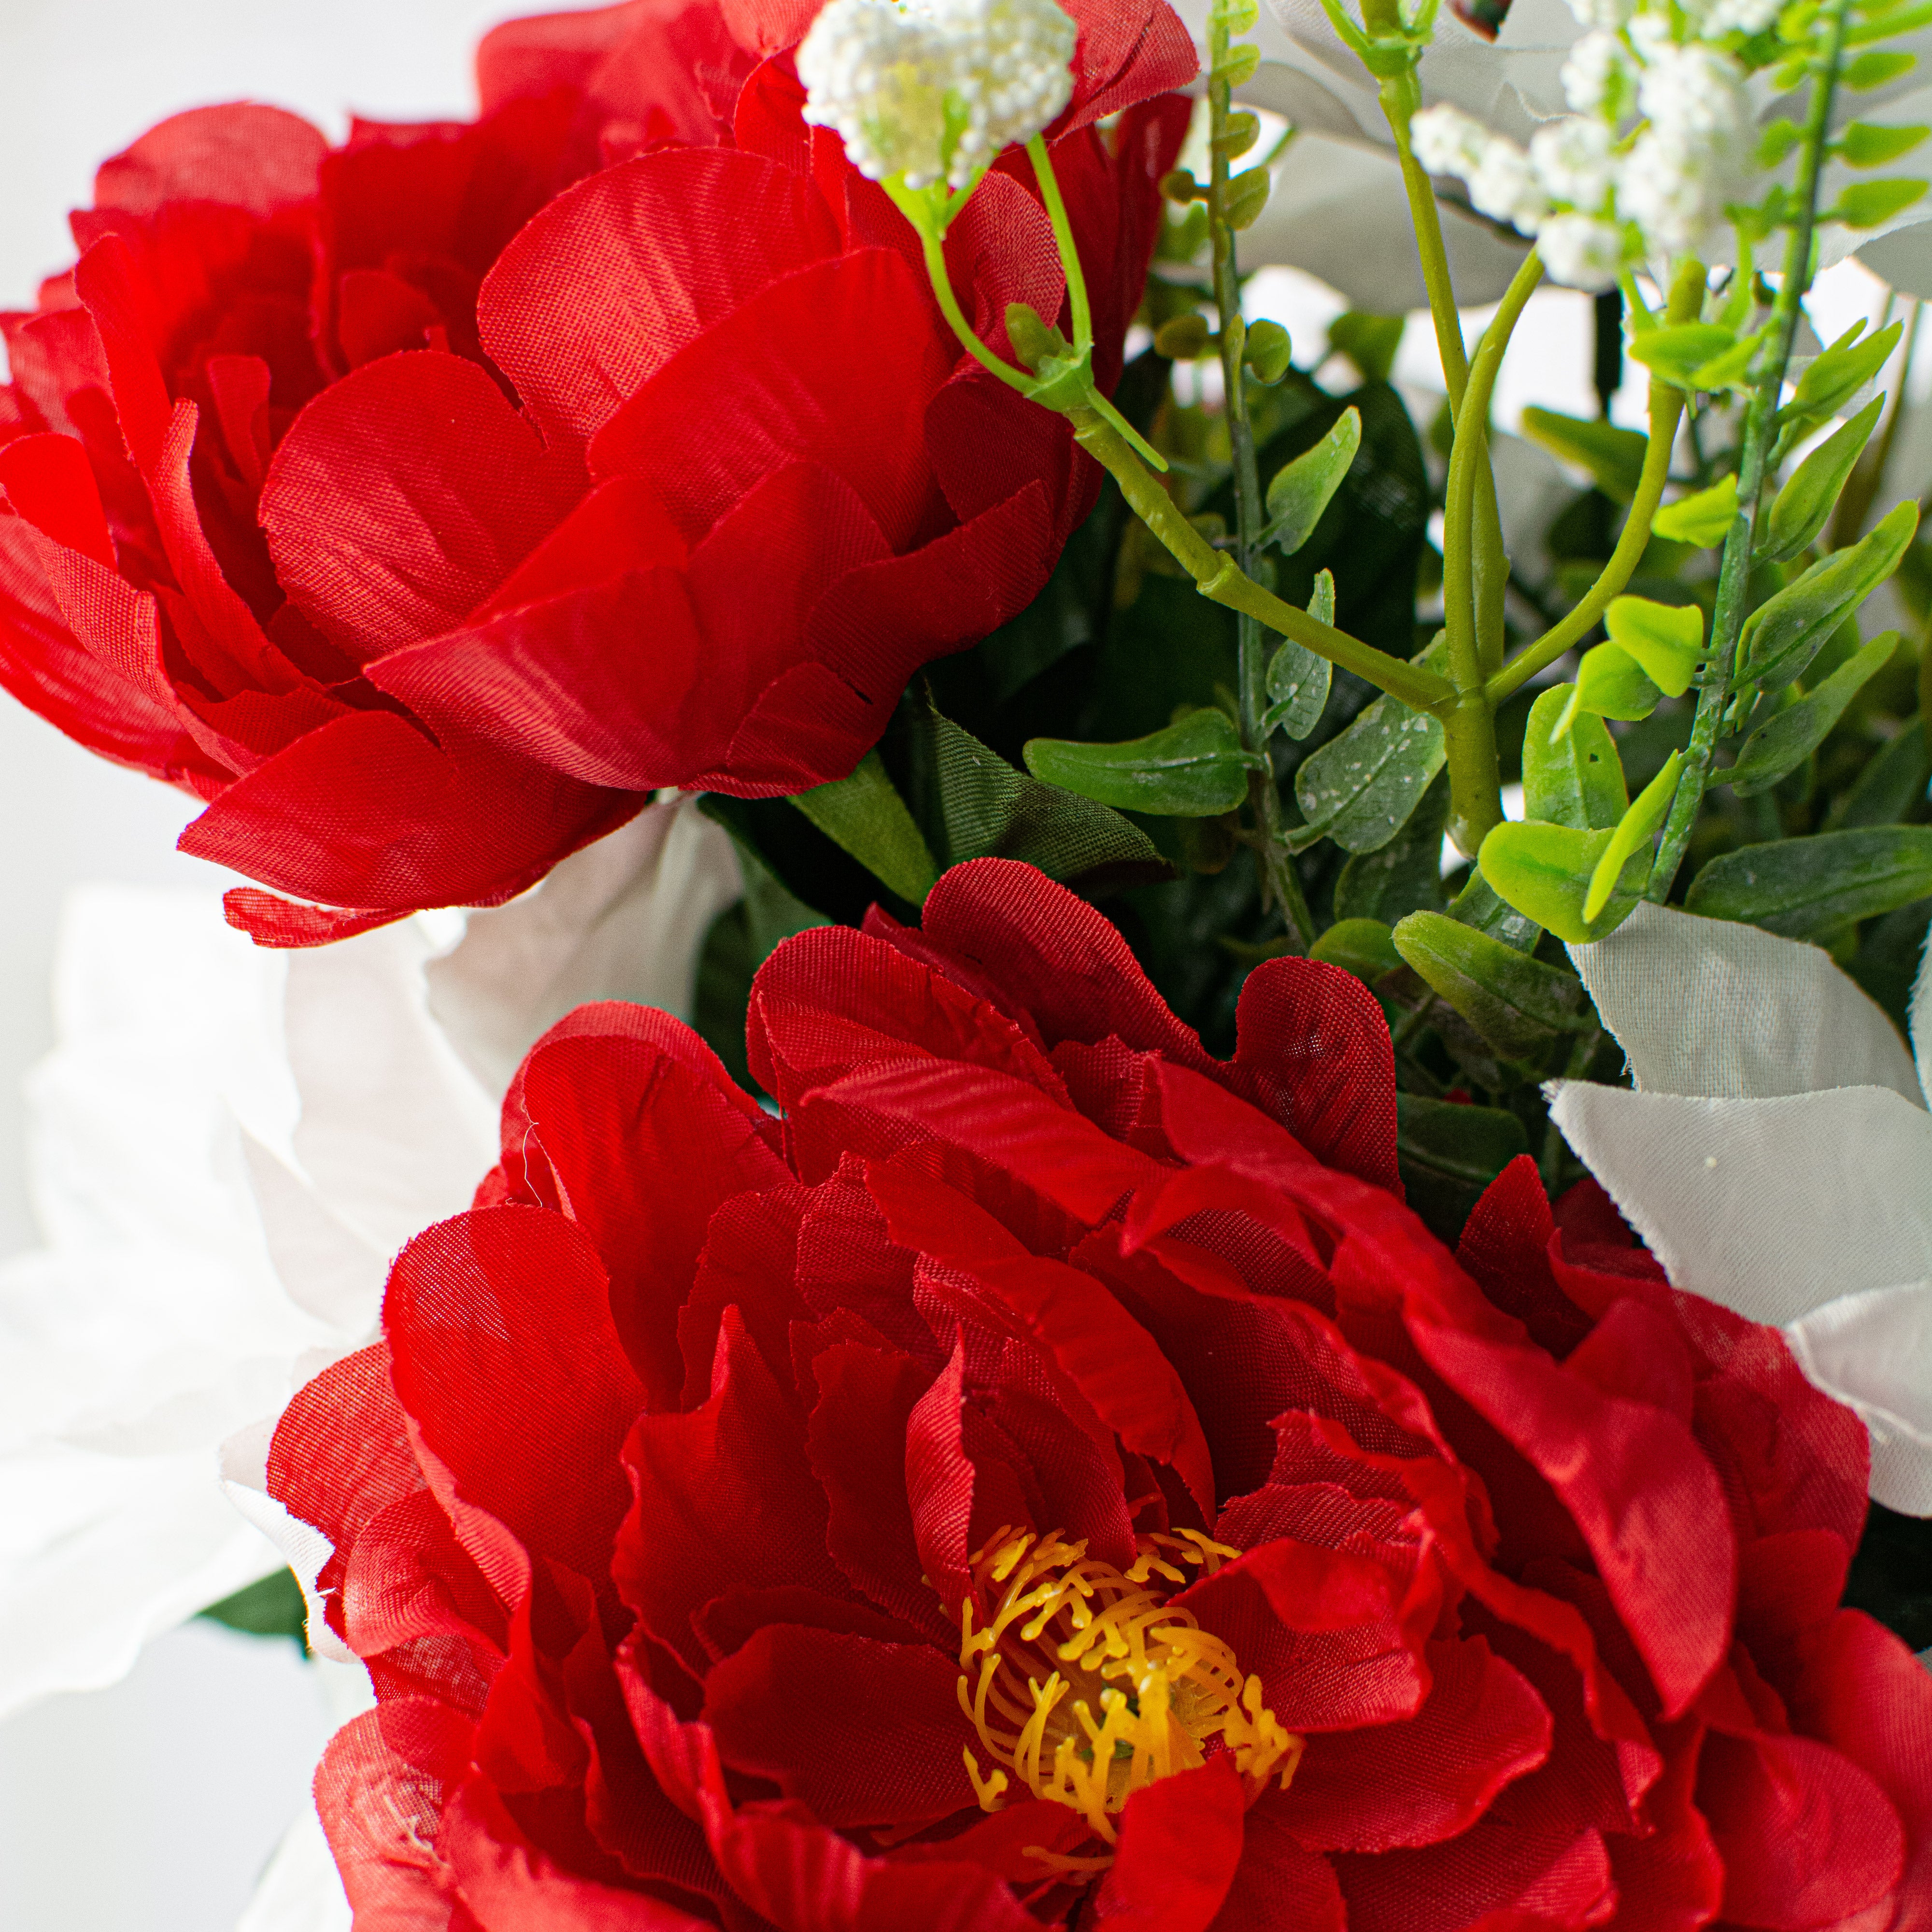 19" Poinsettia & Peony Bush: Red & White